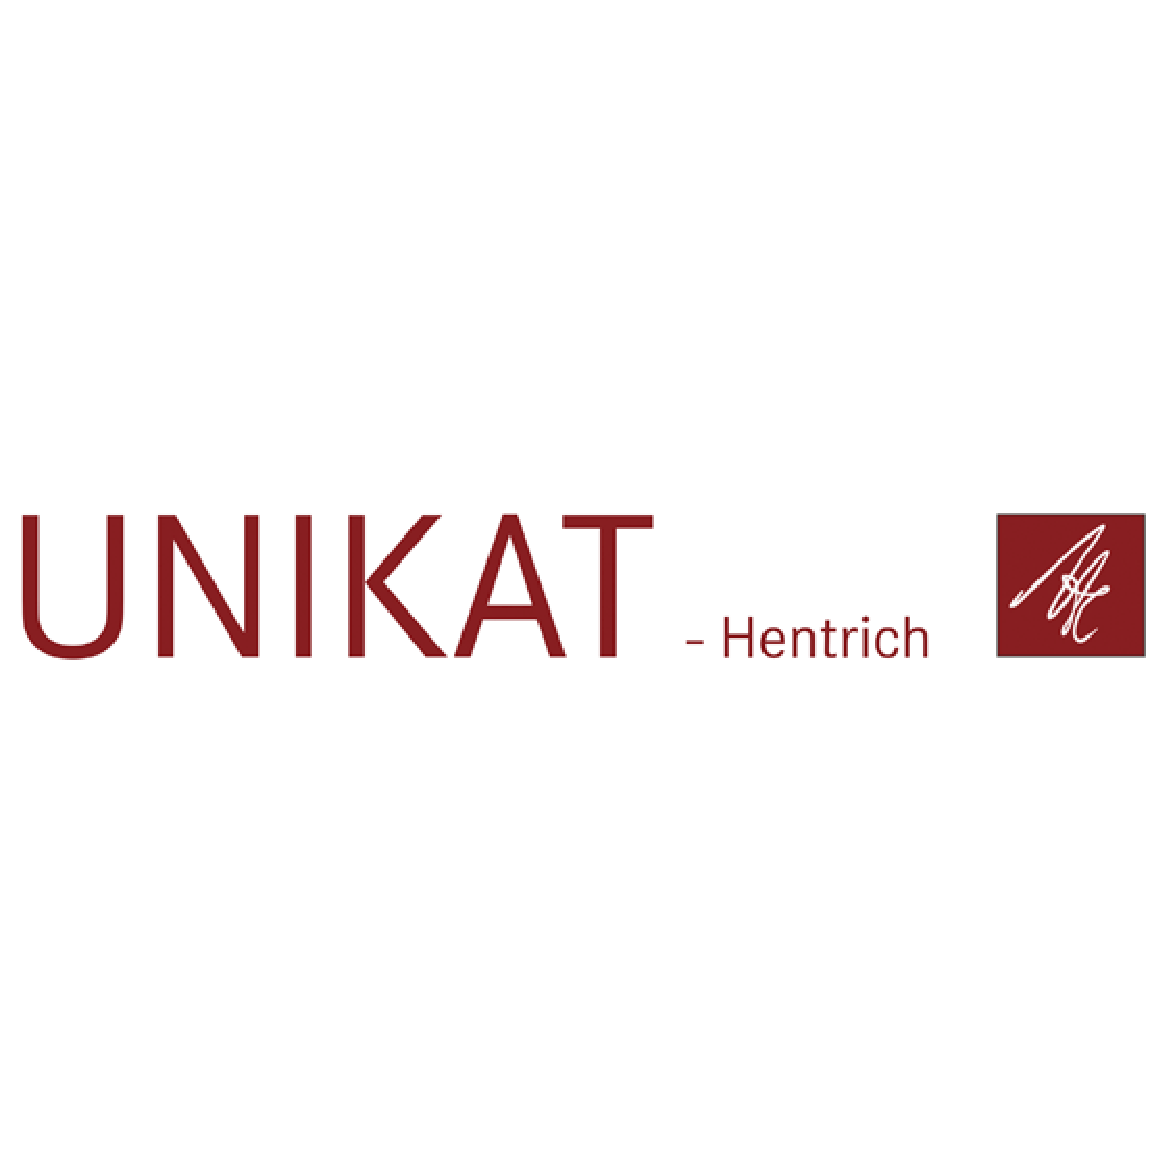 UNIKAT-Hentrich Logo